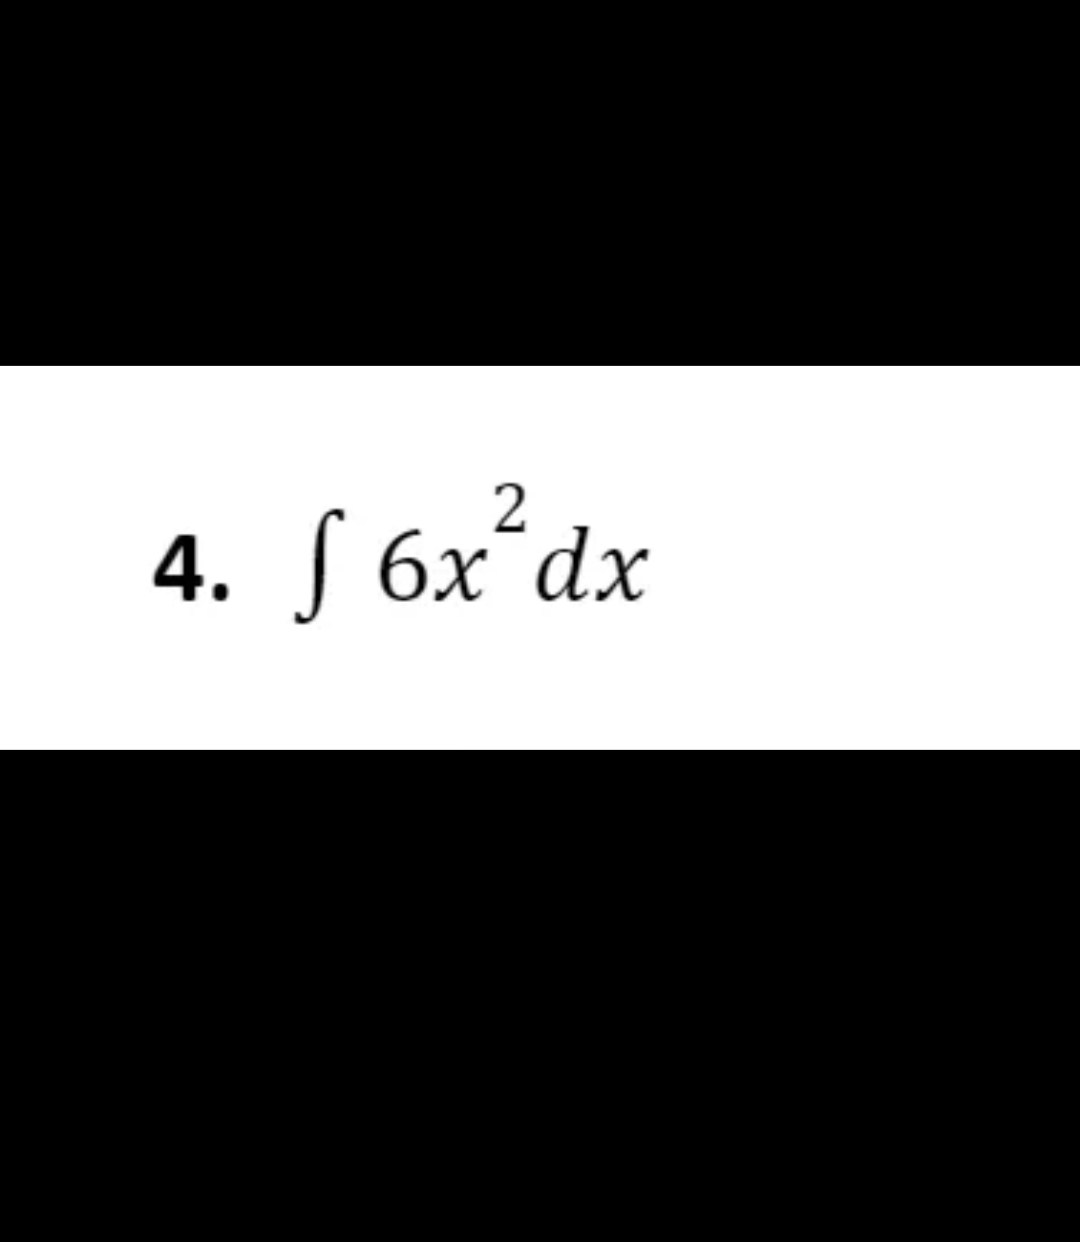 2
4. S 6x² dx